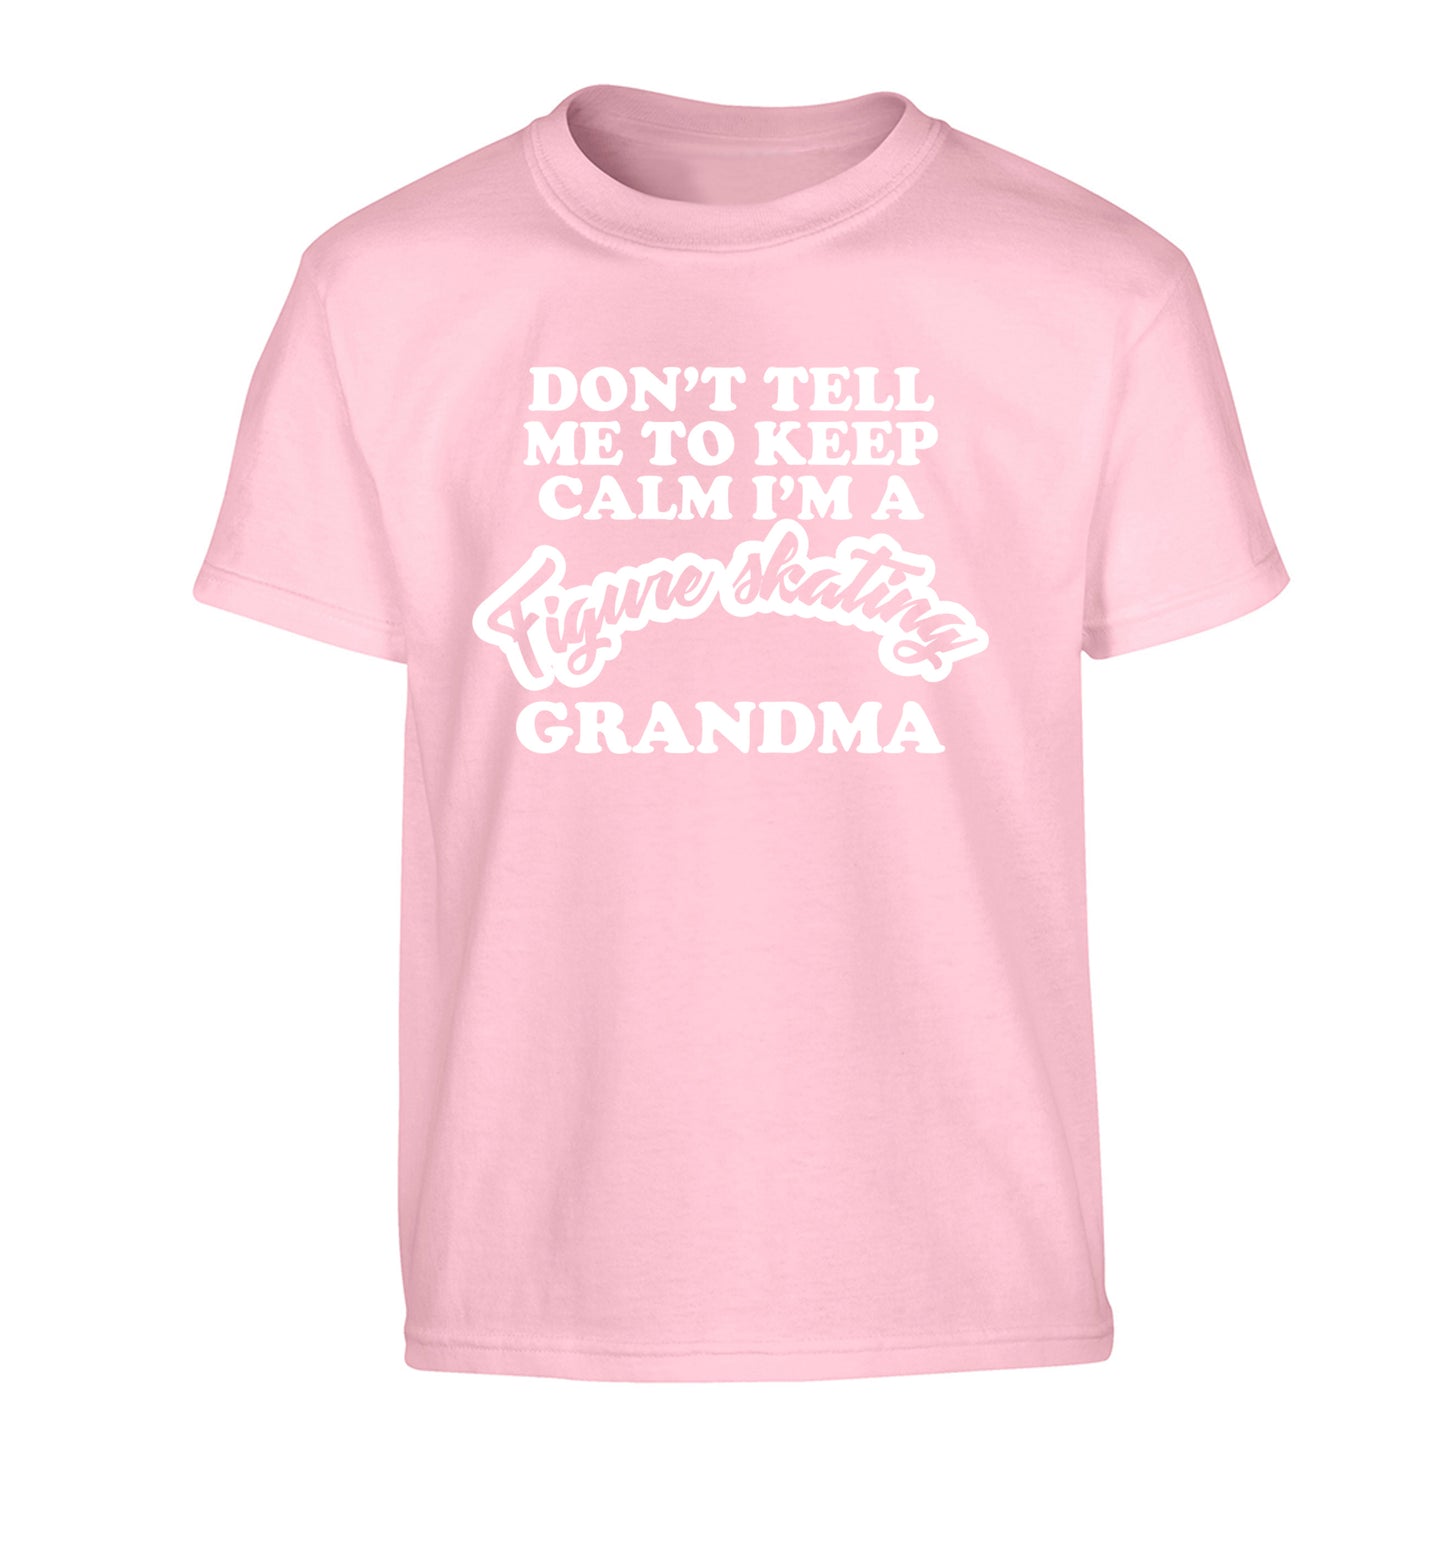 Don't tell me to keep calm I'm a figure skating grandma Children's light pink Tshirt 12-14 Years